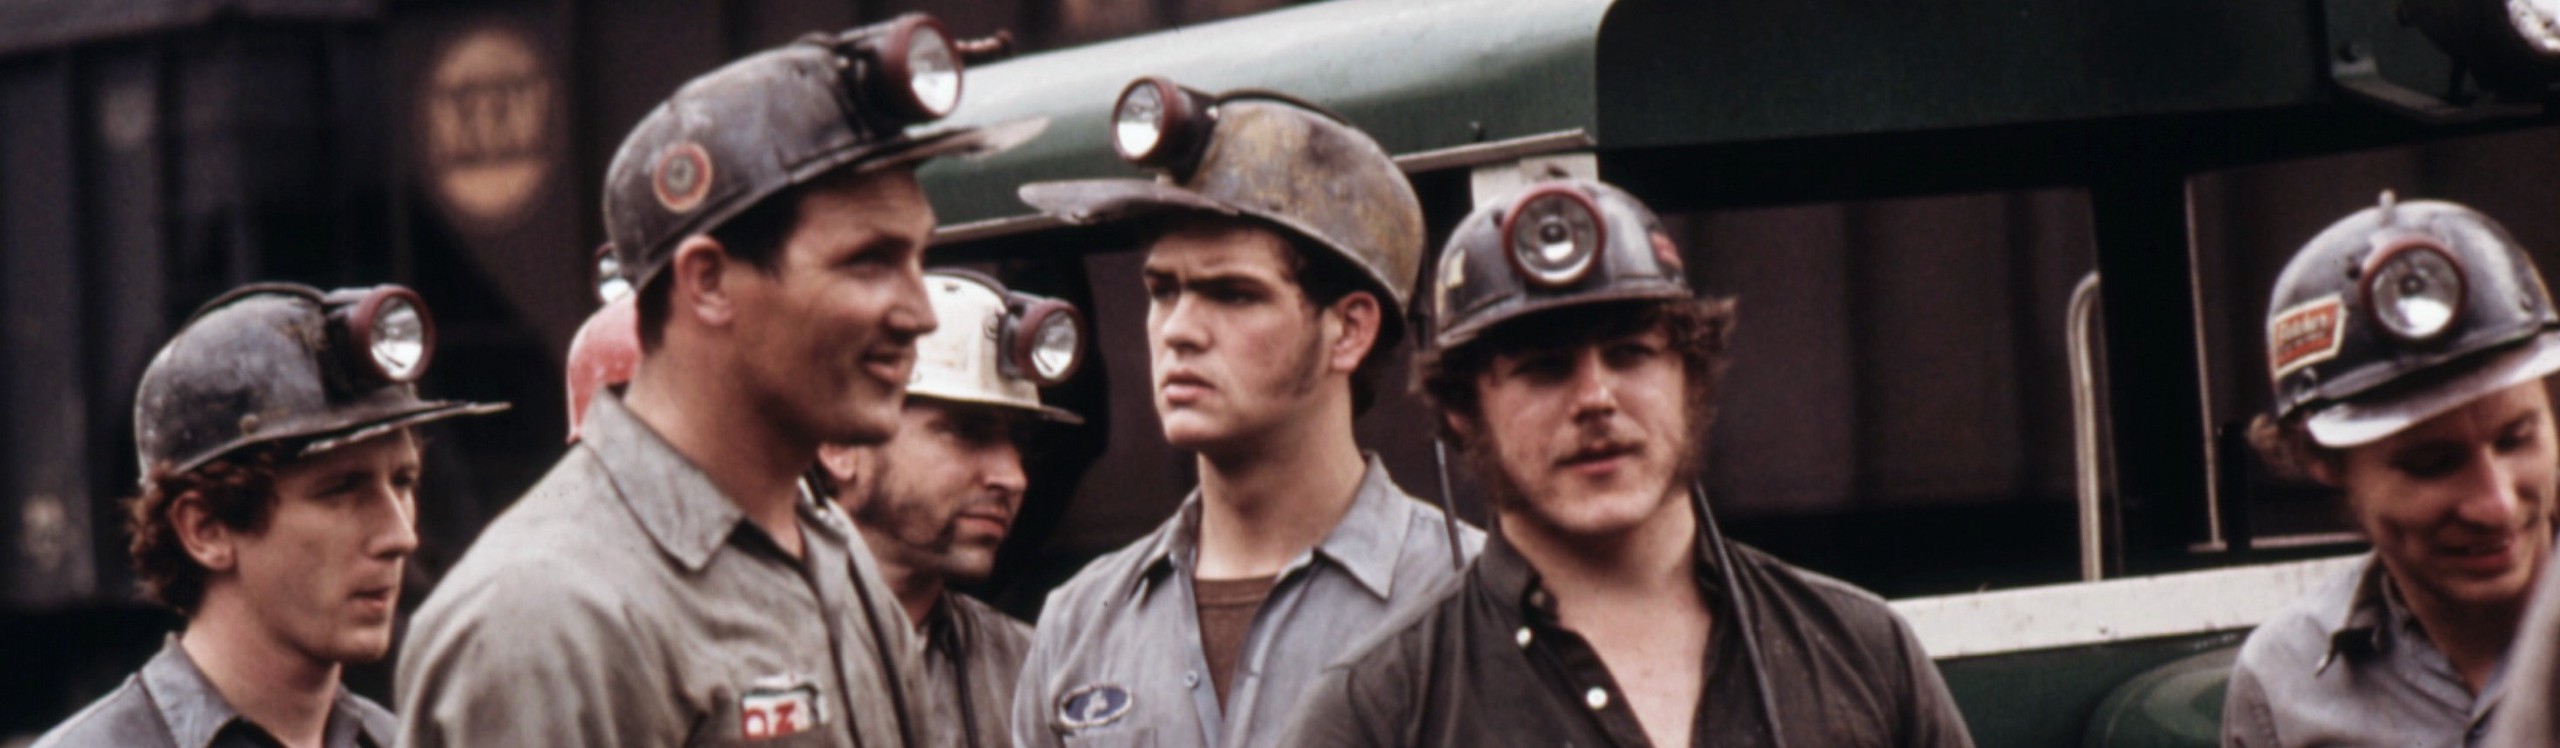 miners talking. Virginia